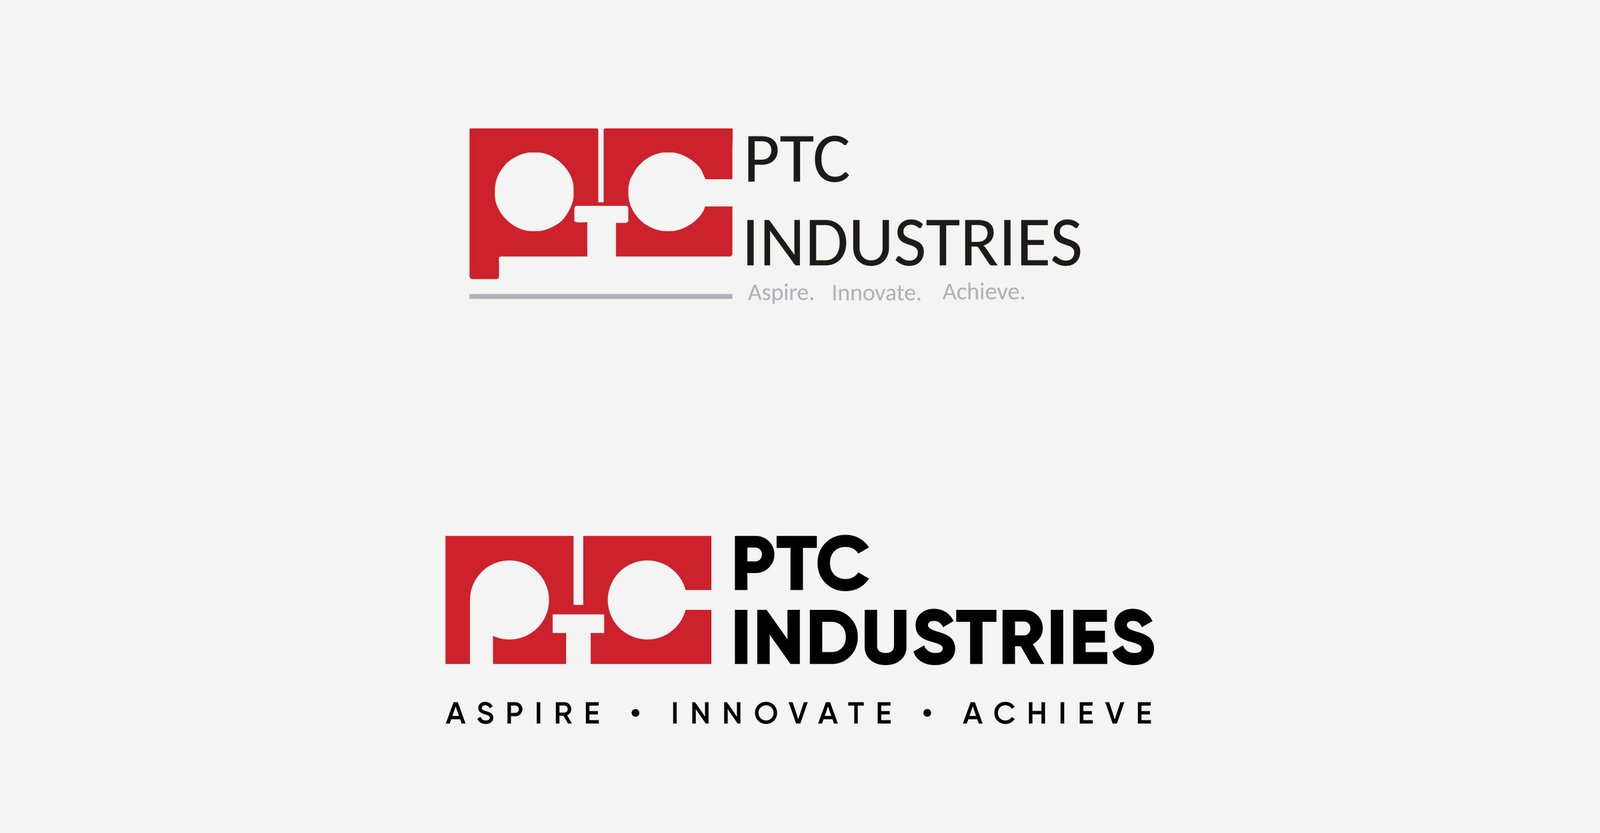 ptc industries rebranding - pulakb.com